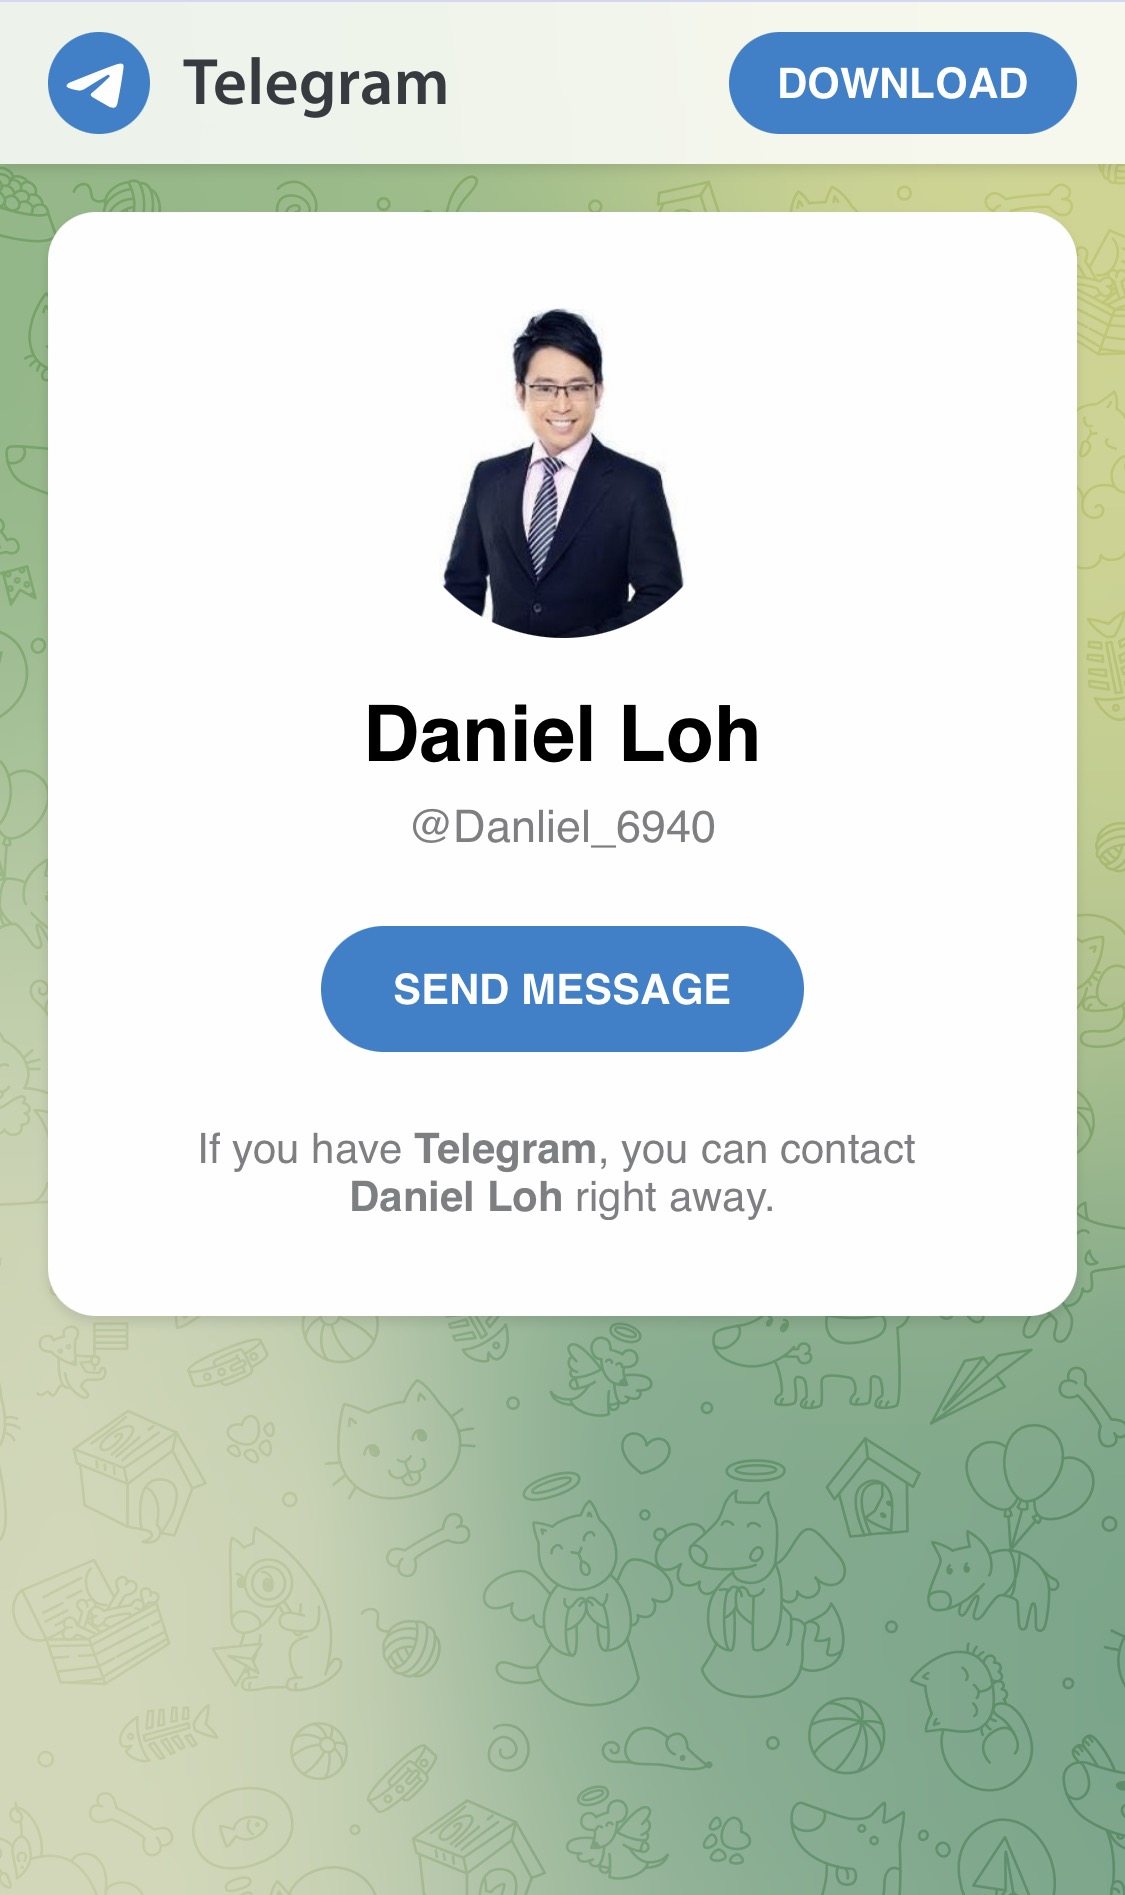 spam message link to a telegram channel of Daniel Loh